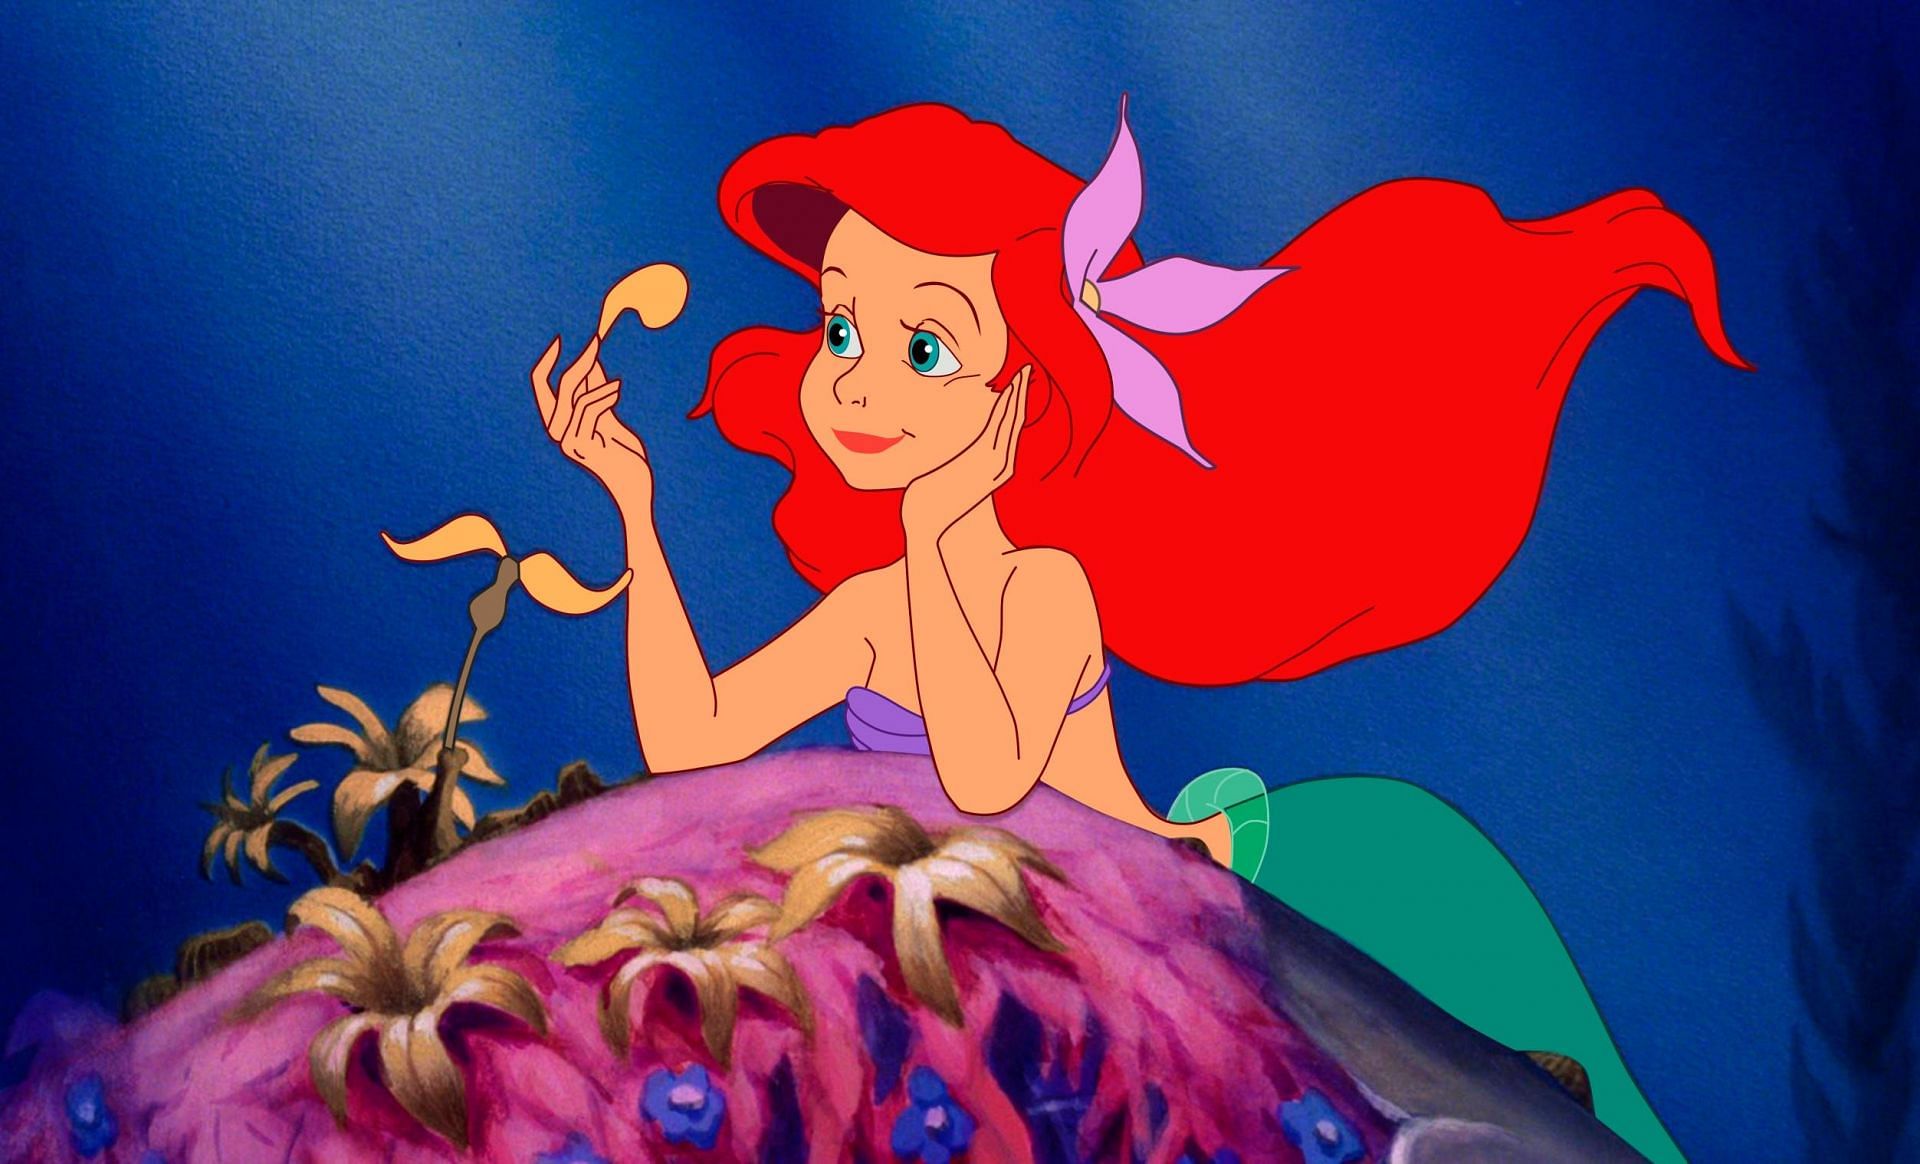 Ariel from The Little Mermaid (Image via Disney)